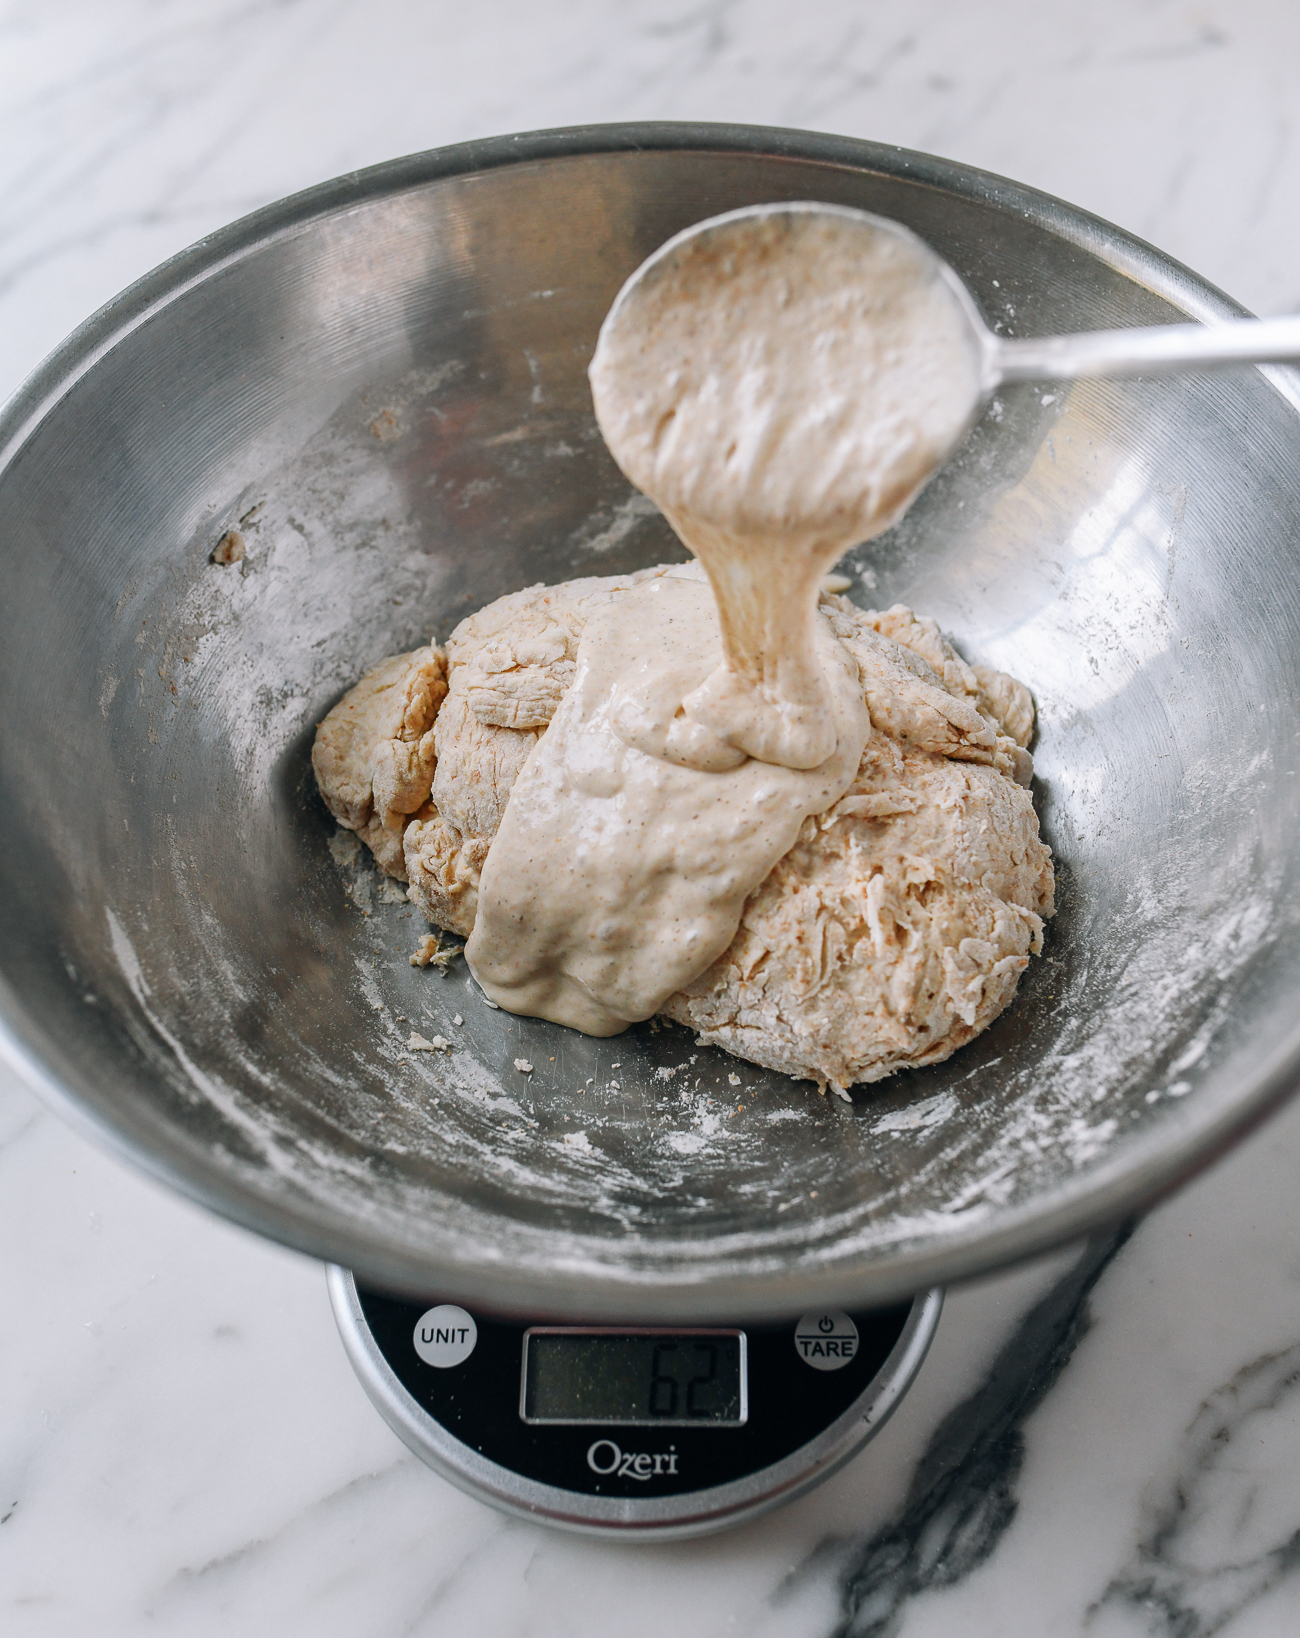 Adding starter to autolysed dough